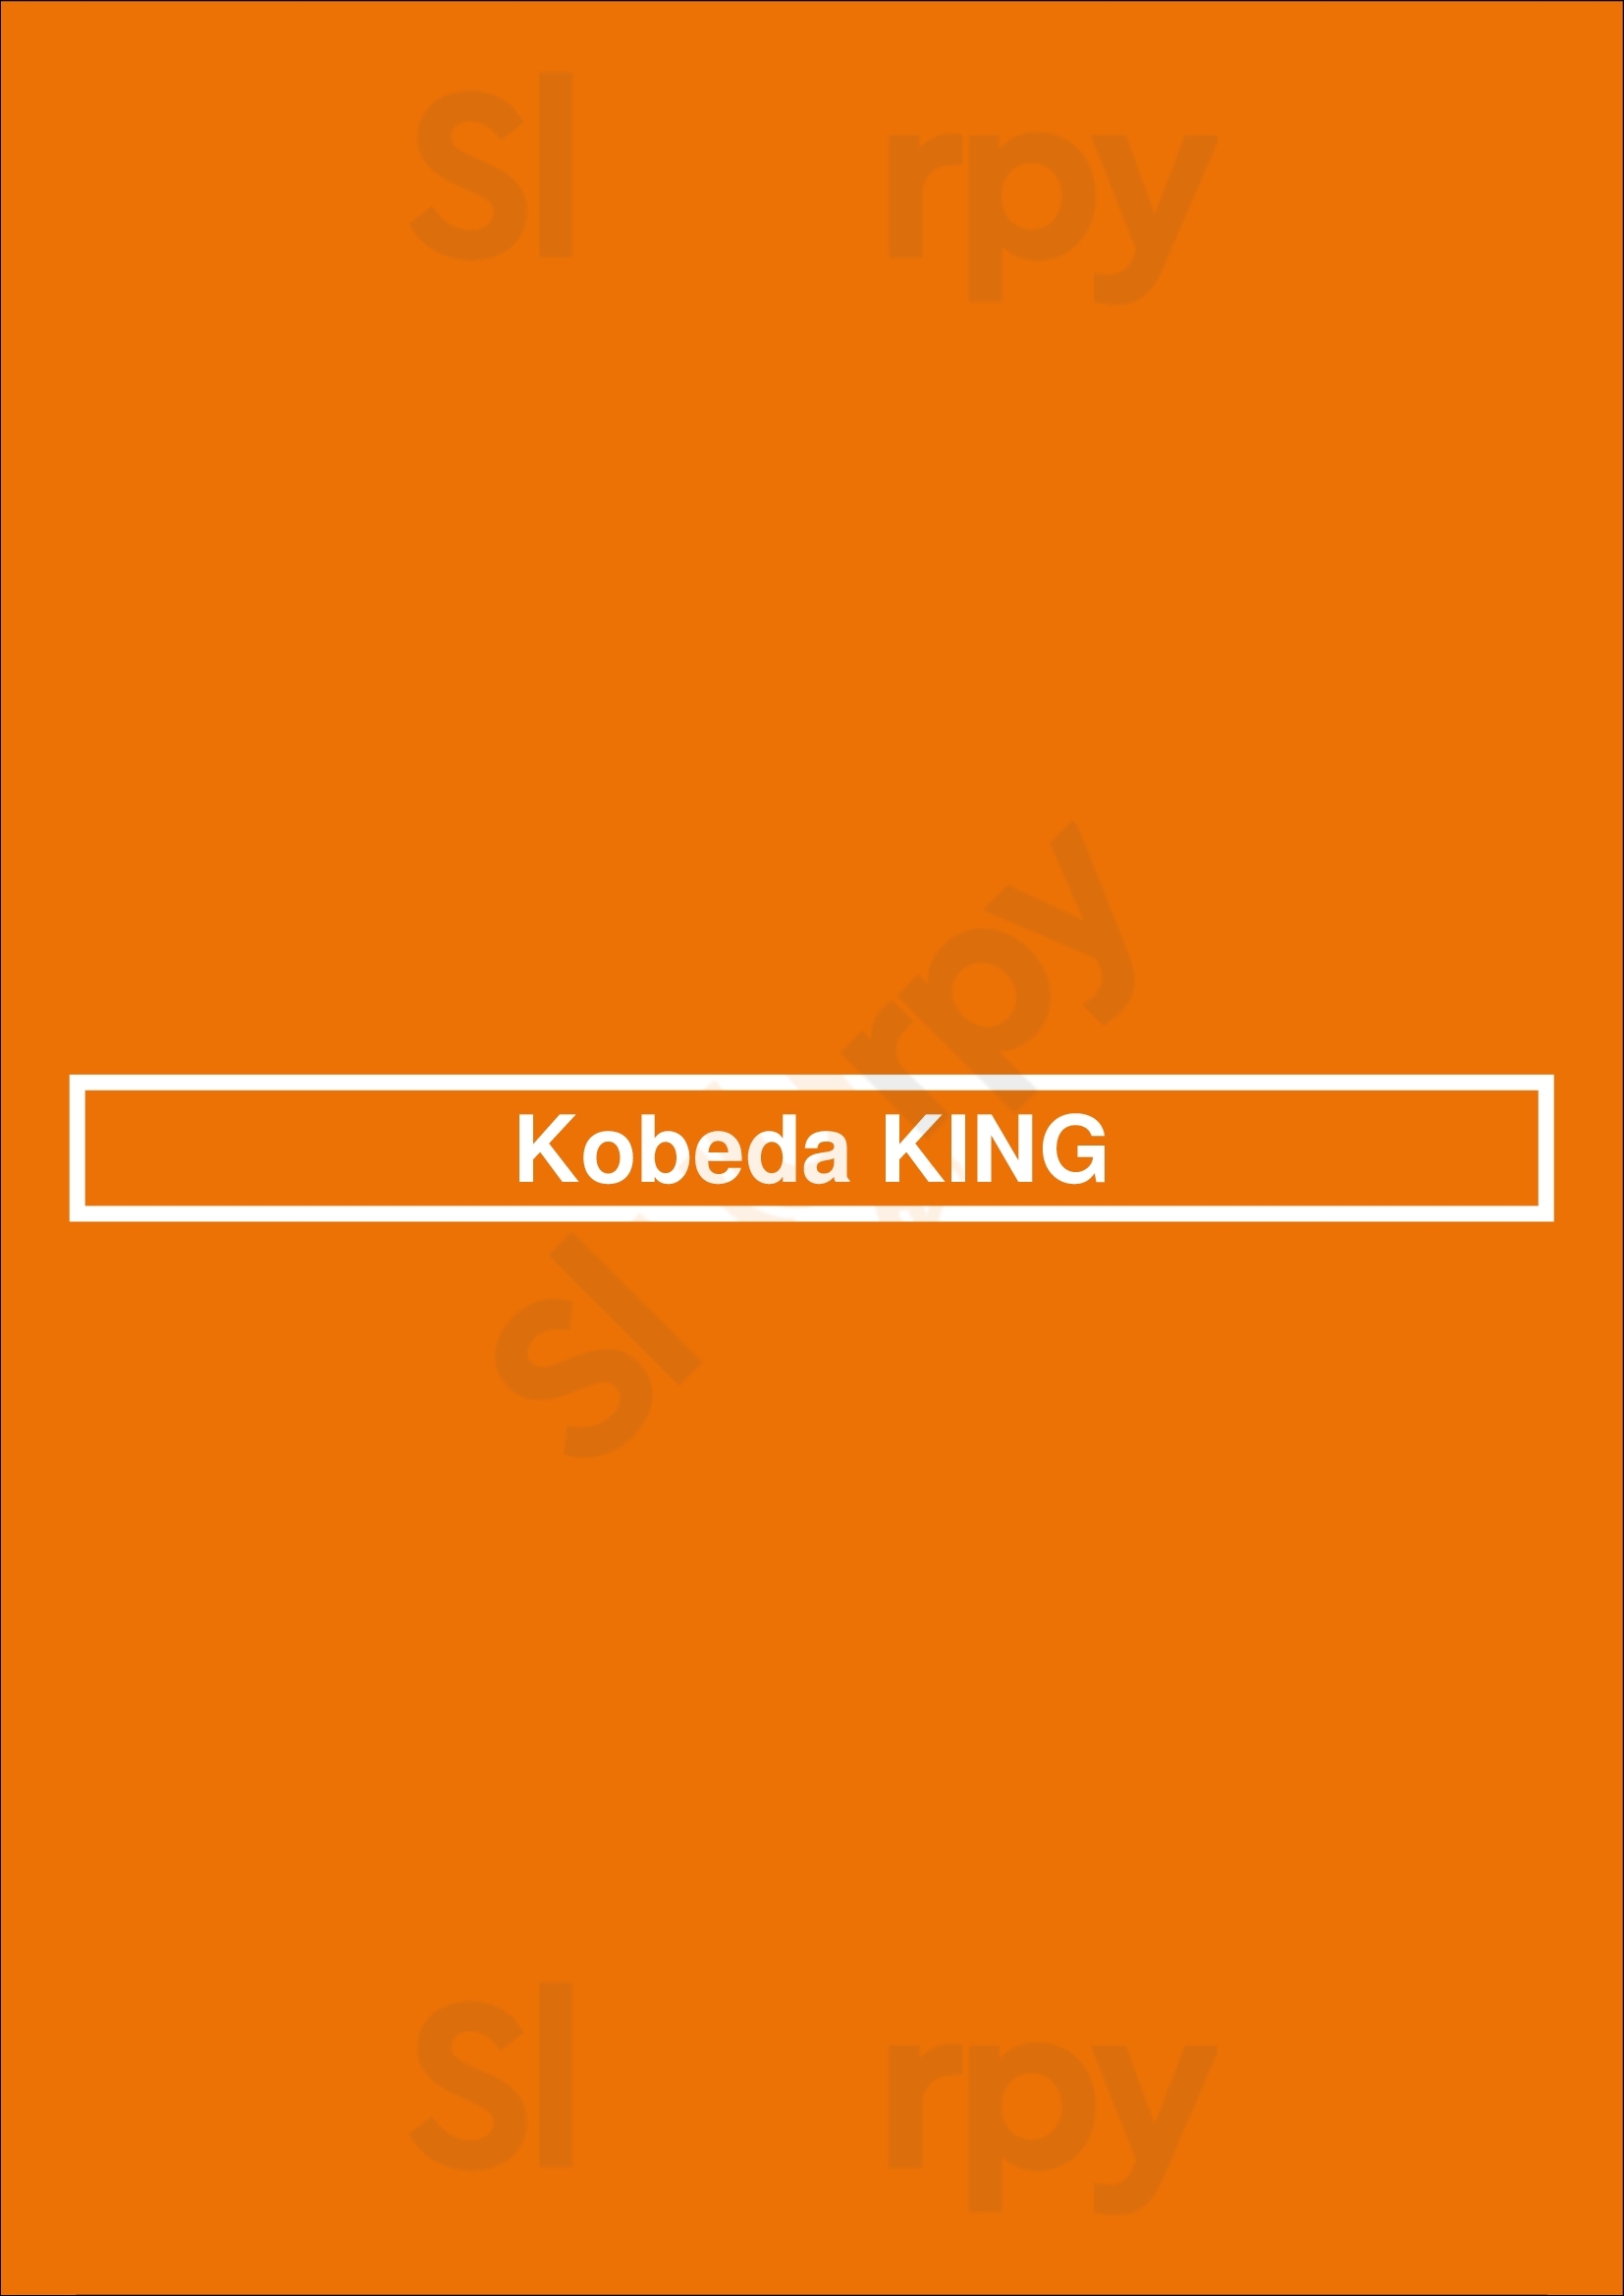 Kobeda King Rochdale Menu - 1